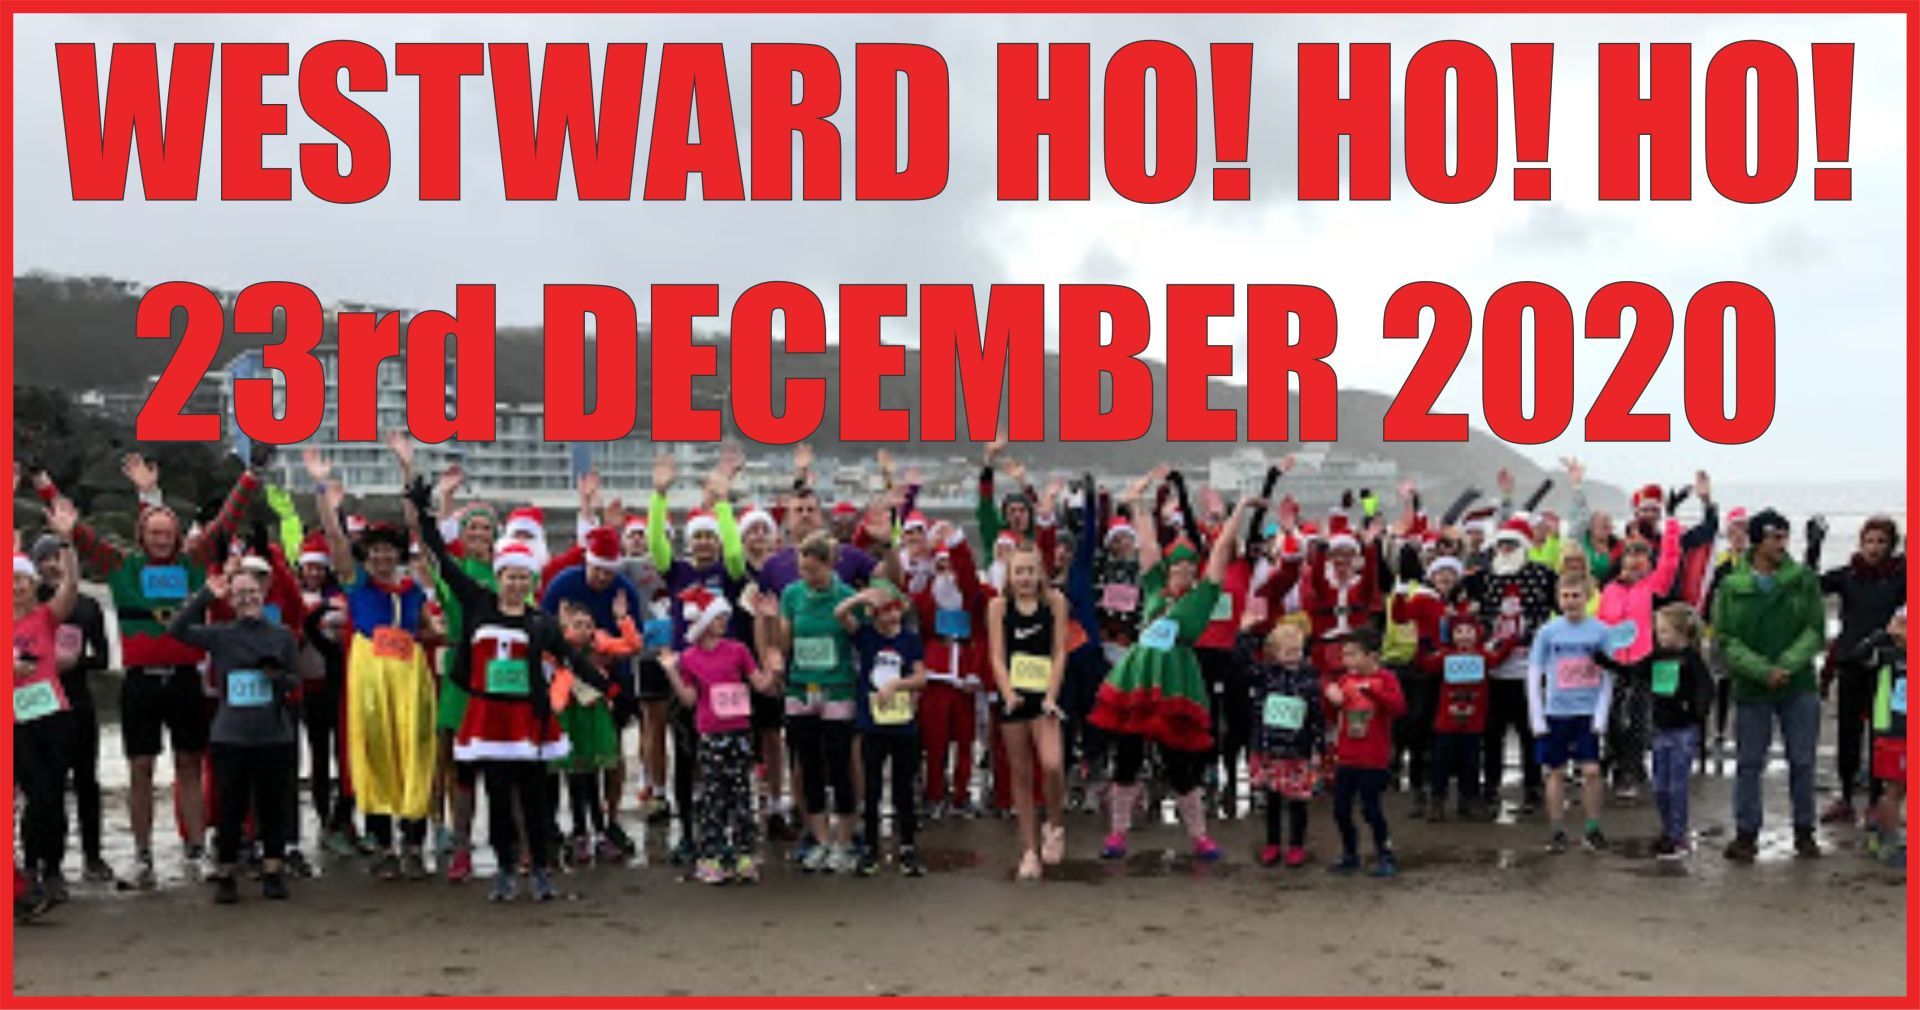 The Westward Ho! Sandy Santa Fun Run held on the beach every December